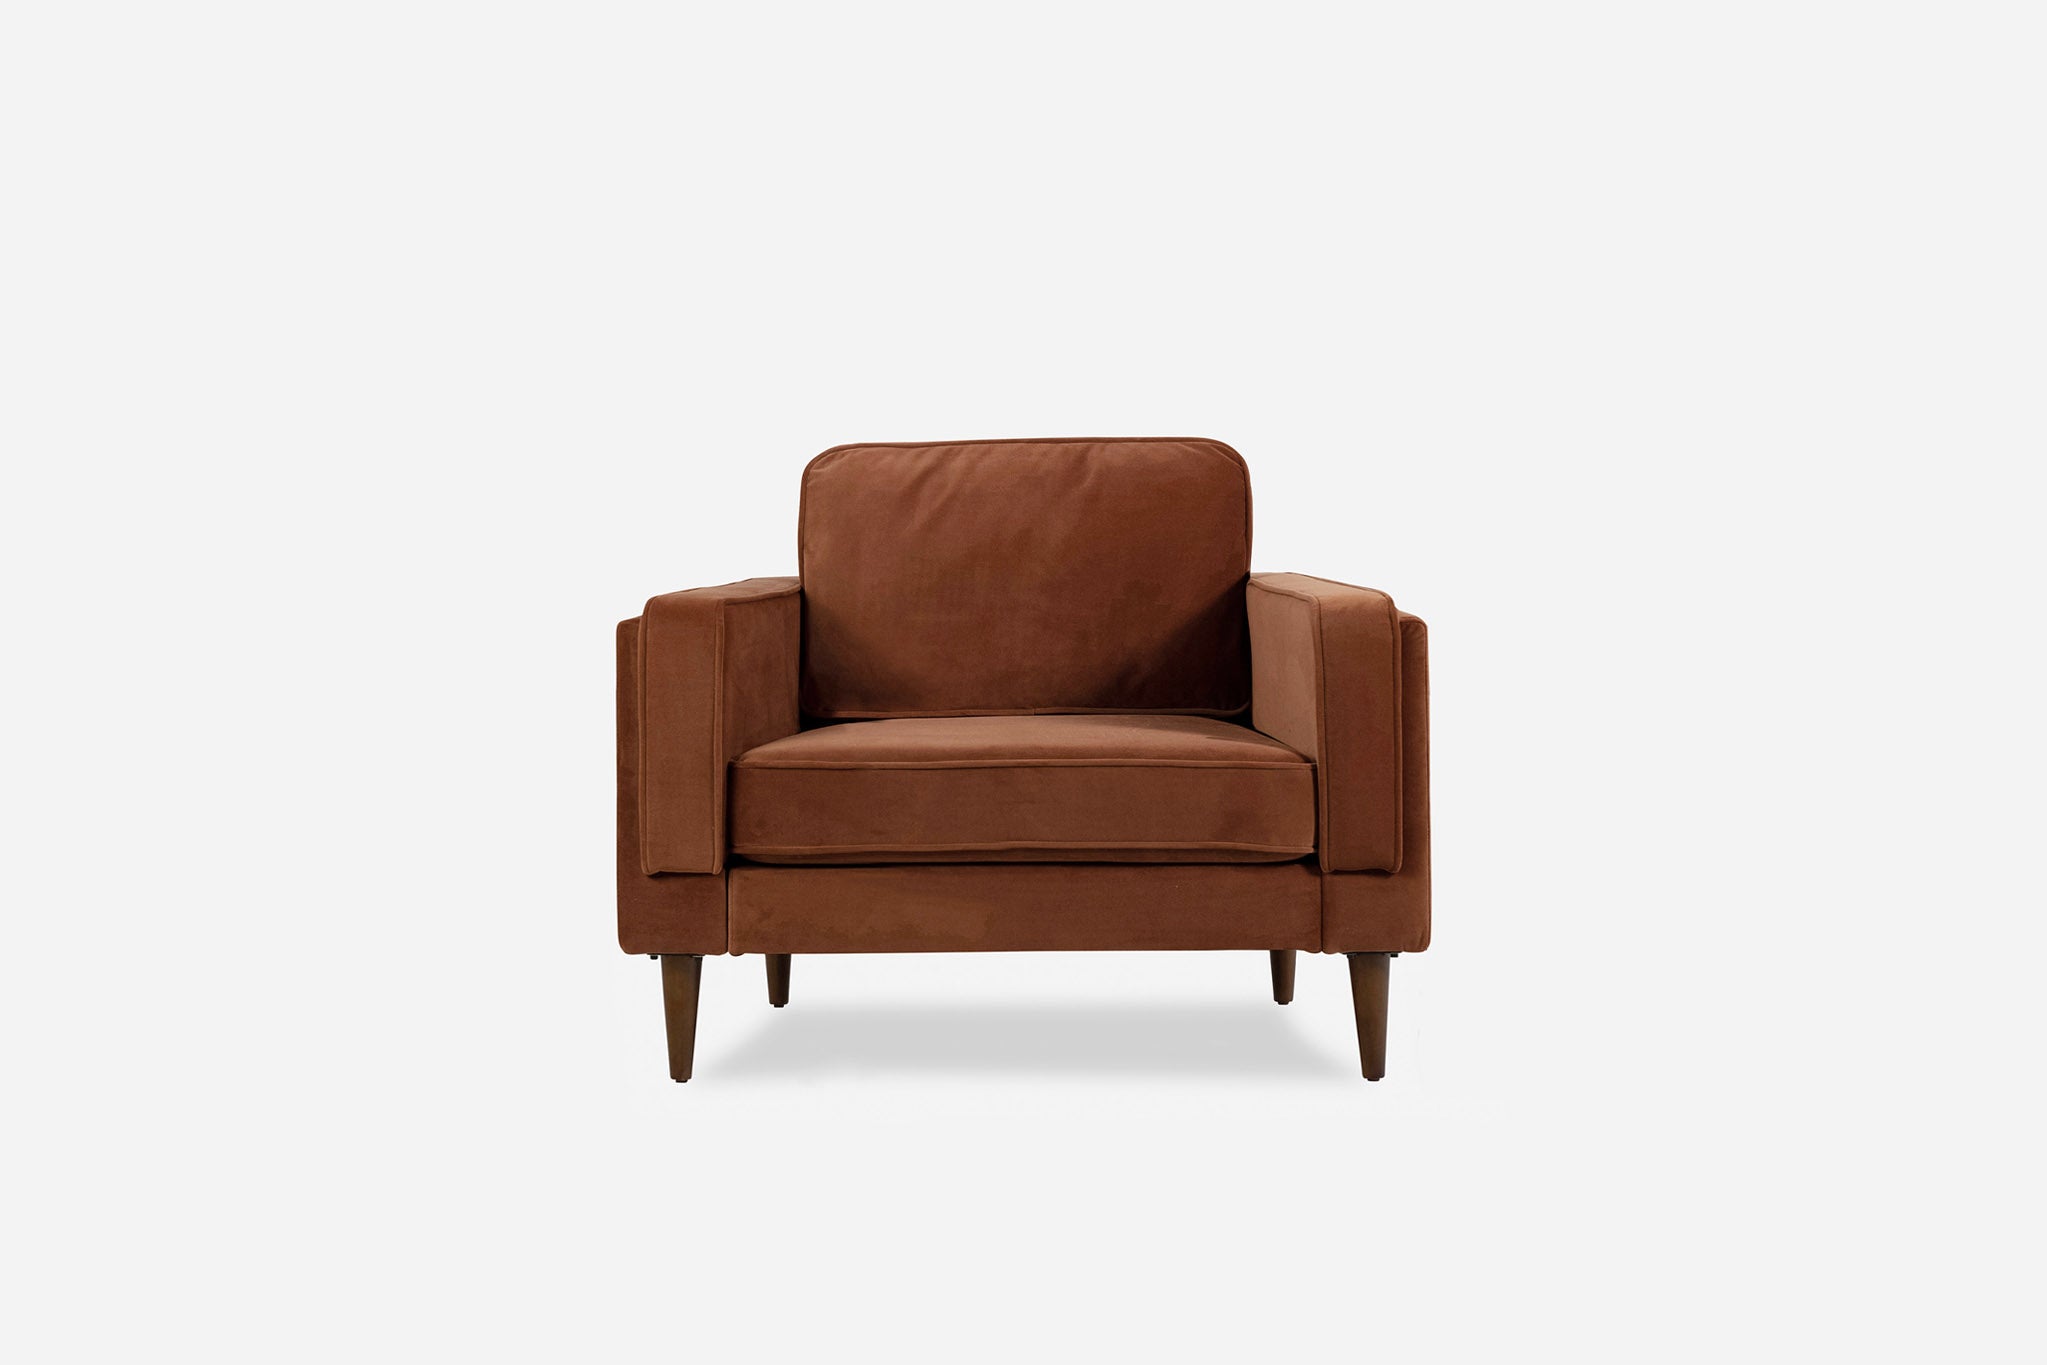 albany armchair shown in rust velvet with walnut legs